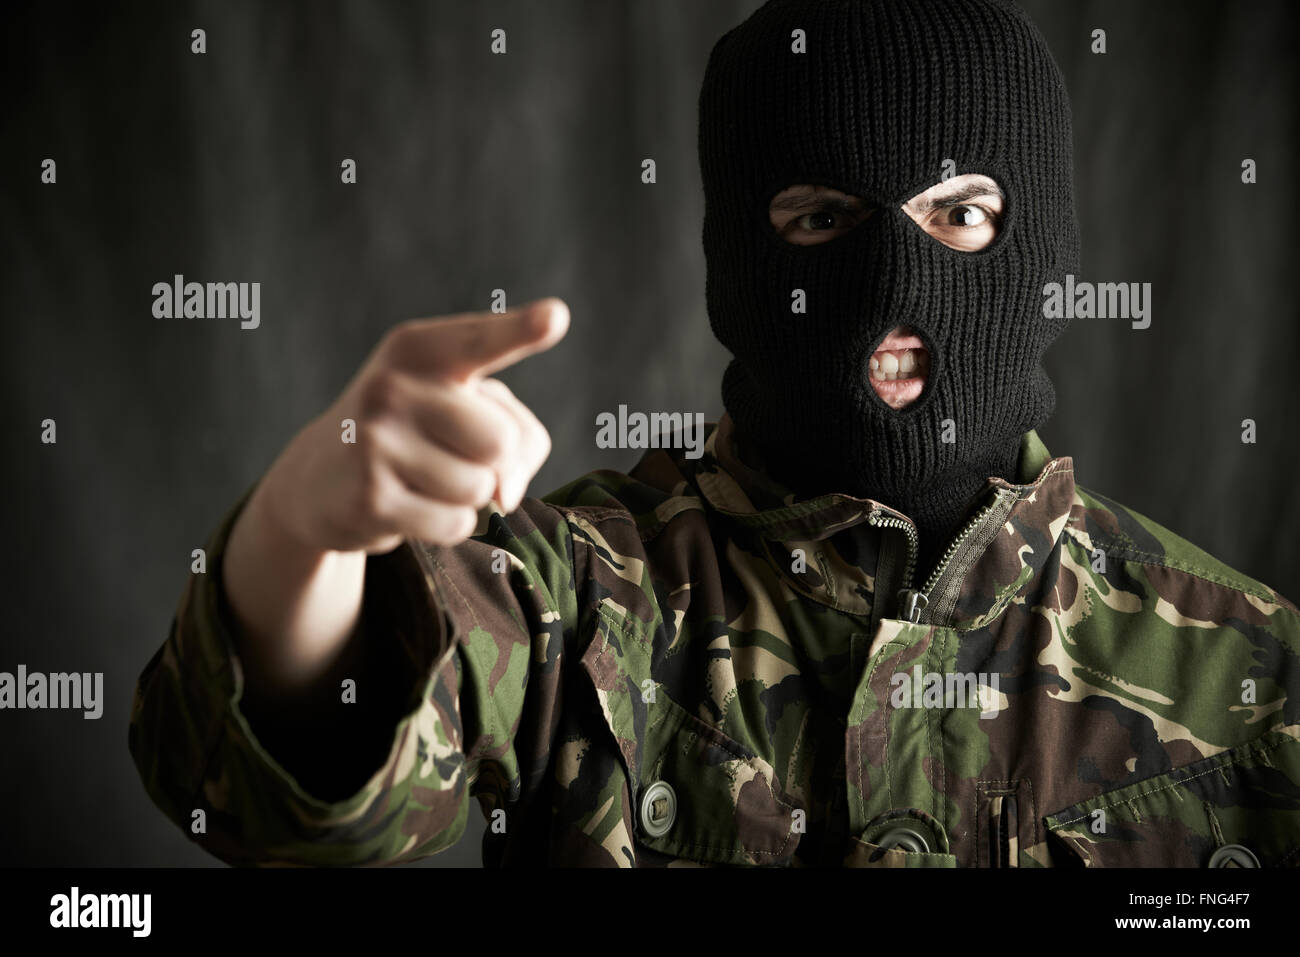 Portrait Of Terrorist Addressing Camera Stock Photo